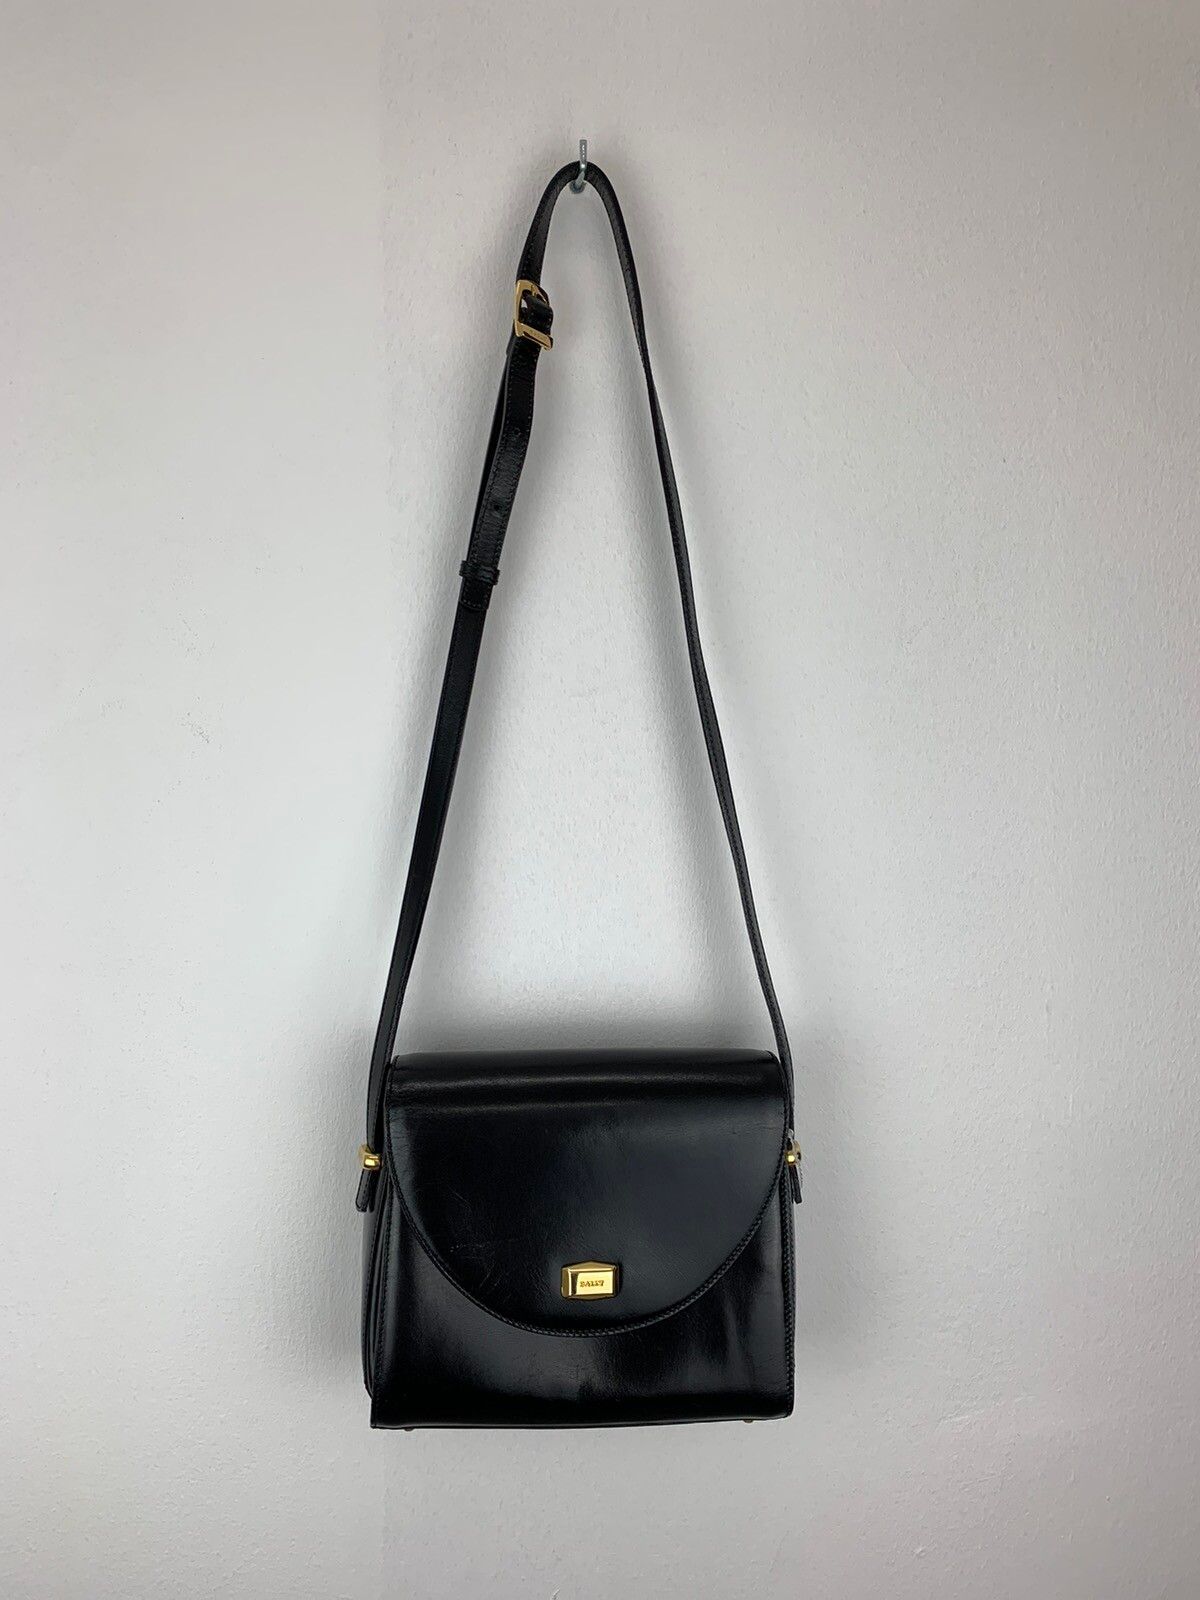 BALLY VINTAGE black leather hard shell bag antique bag Italy - 1